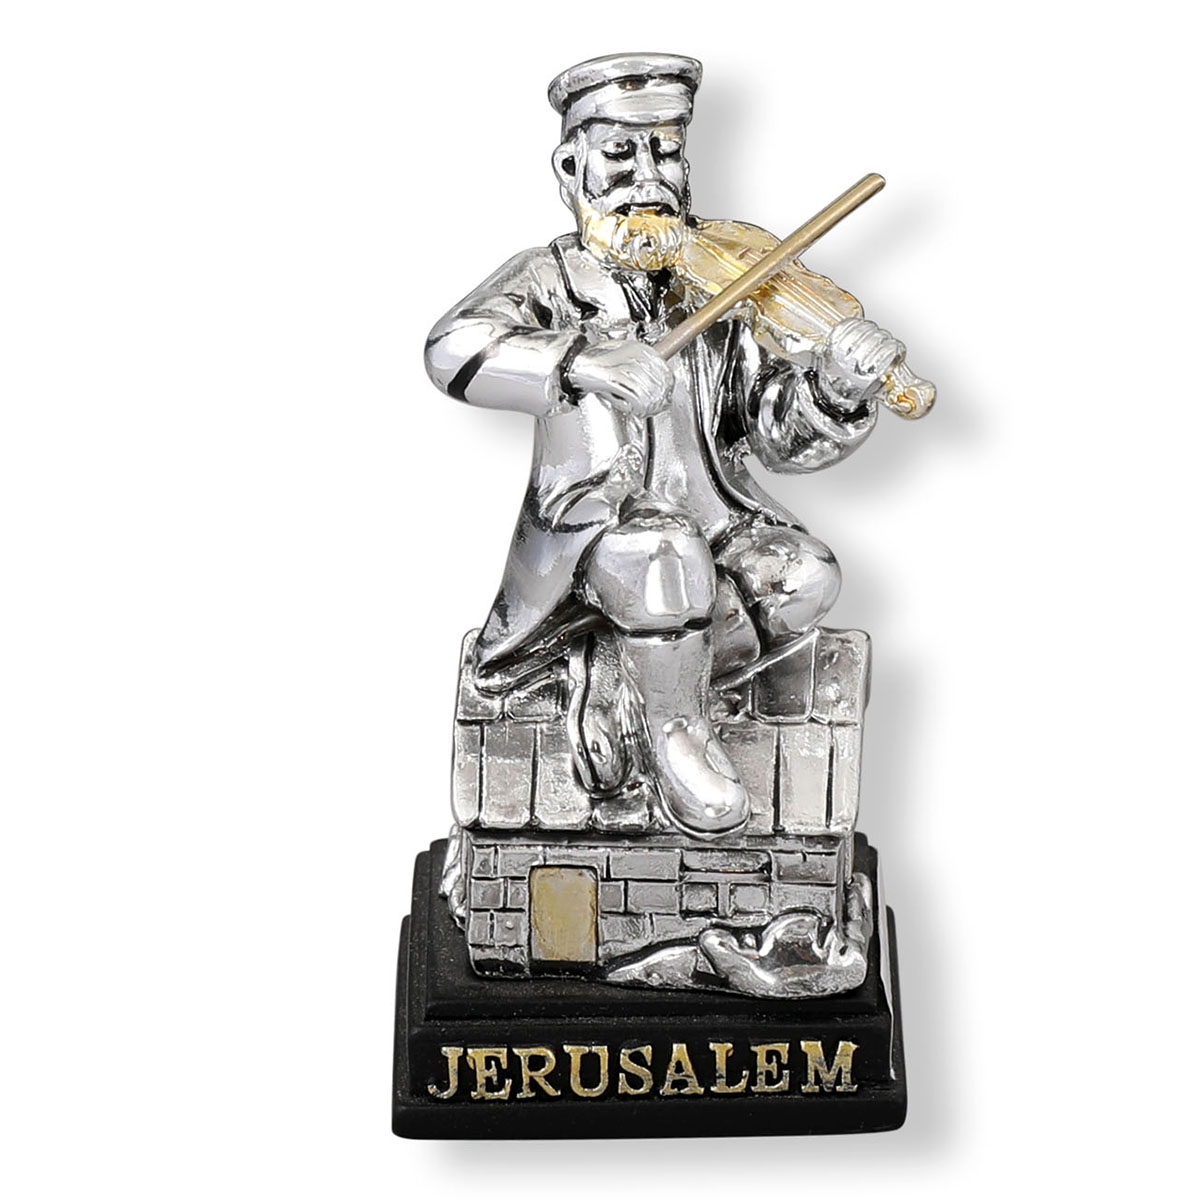 Jerusalem Fiddler on The Roof Silver-Plated Figurine - 1